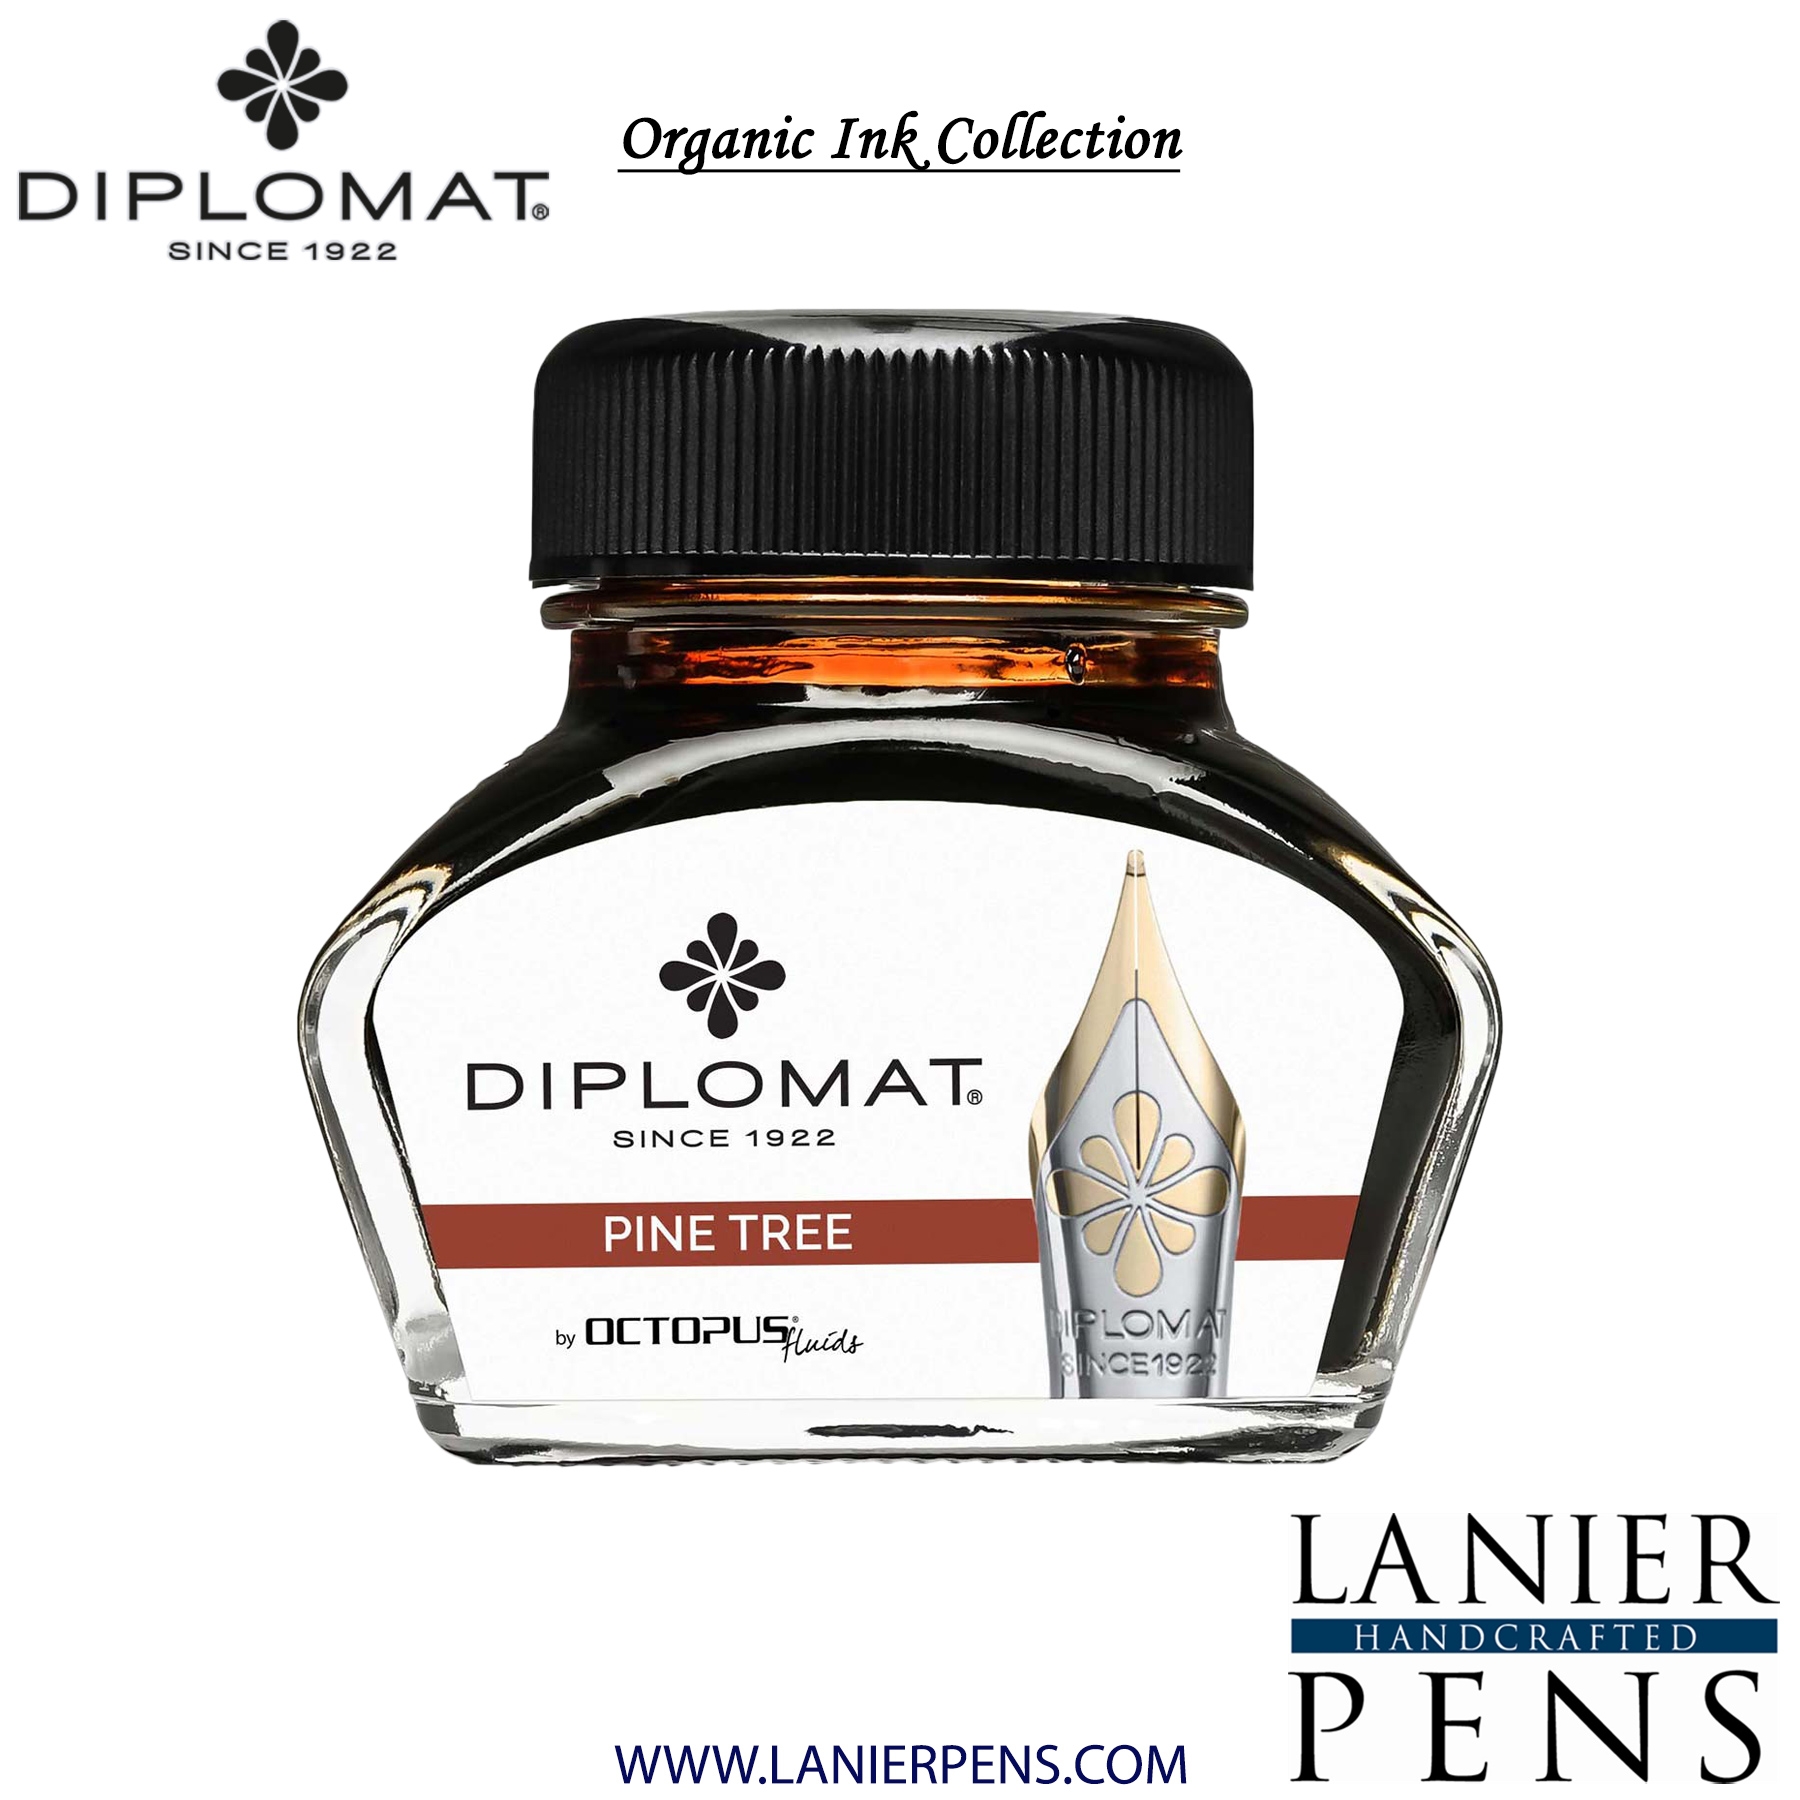 Diplomat Pine Tree Ink Bottle, 30ml by Lanier Pens, lanierpens, lanierpens.com, wndpens, WOOD N DREAMS, Pensbylanier